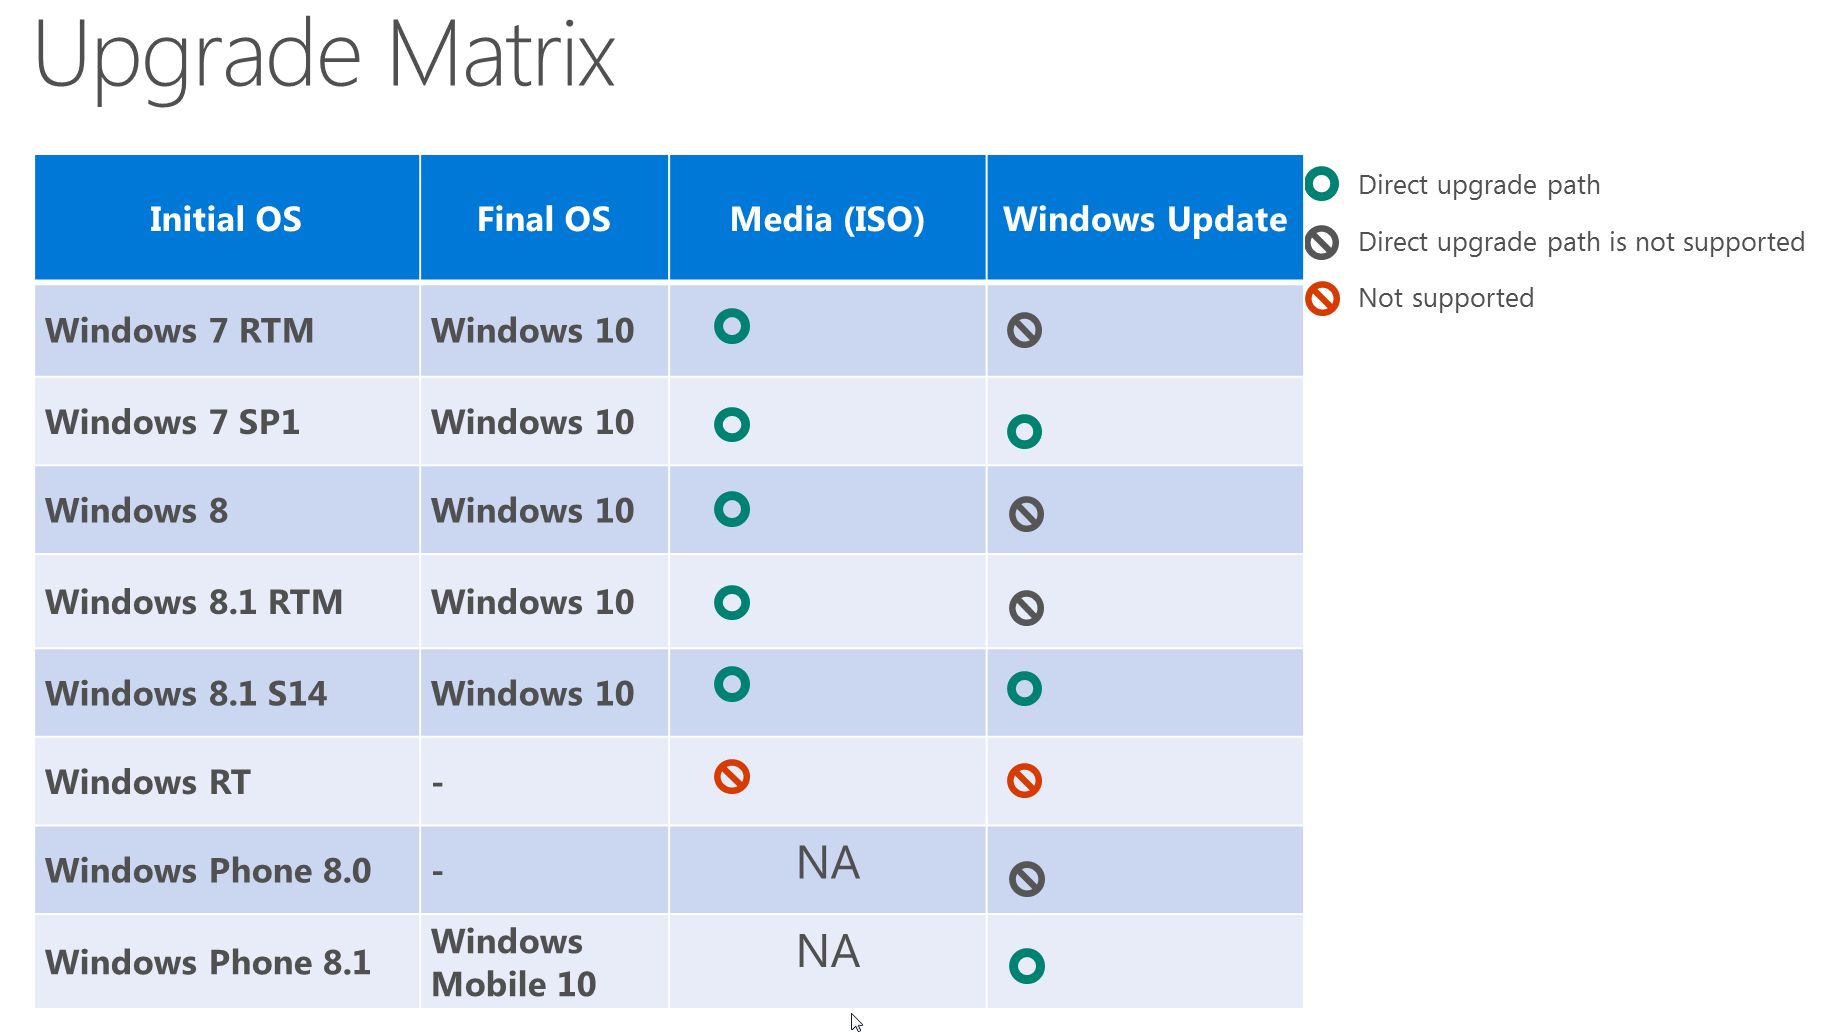 Windows 10 Upgrade Chart